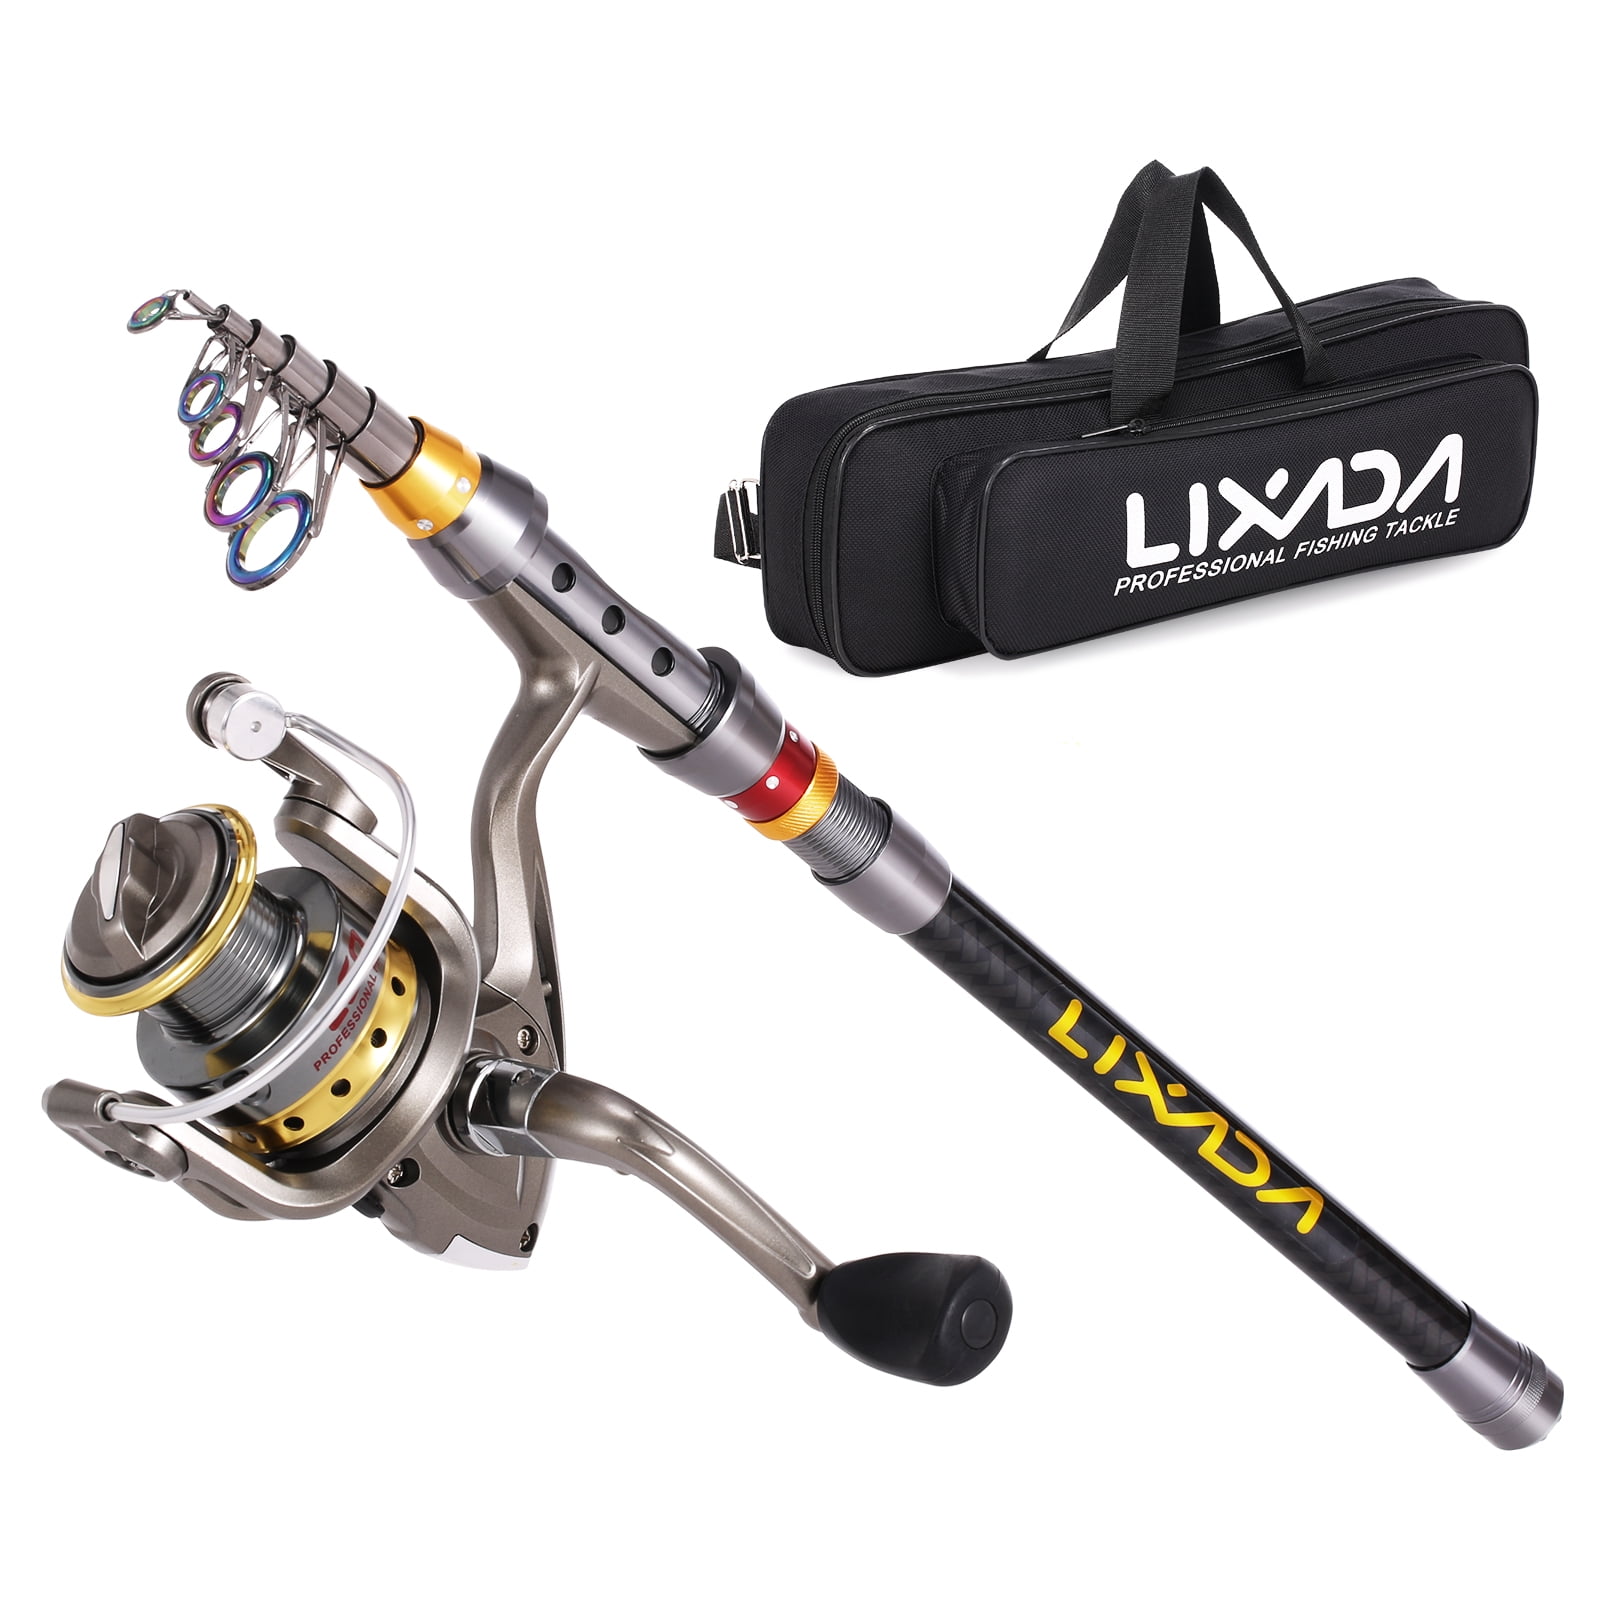 Lixada Fishing Gear Set - Telescopic Carbon Fiber Rod, Spinning Reel,  Tackle Bag - Ultimate Combo for Anglers Seeking Adventure